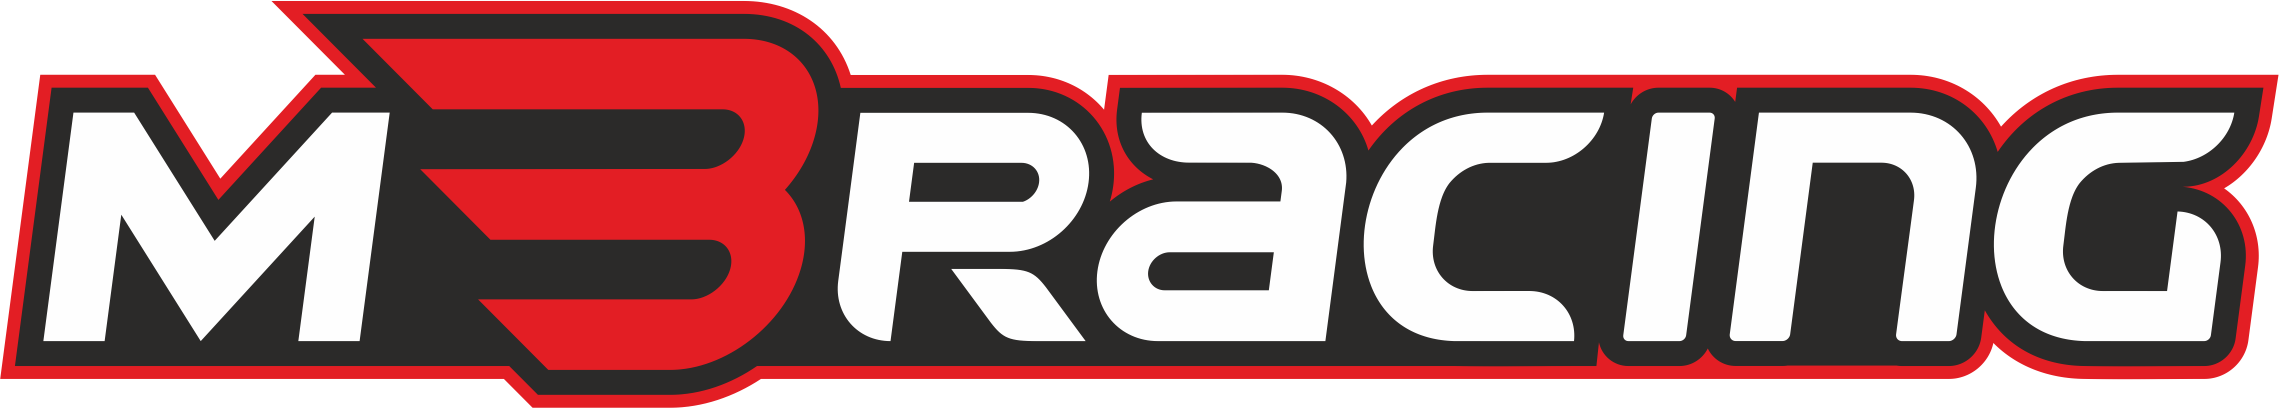 logo-M3Racing